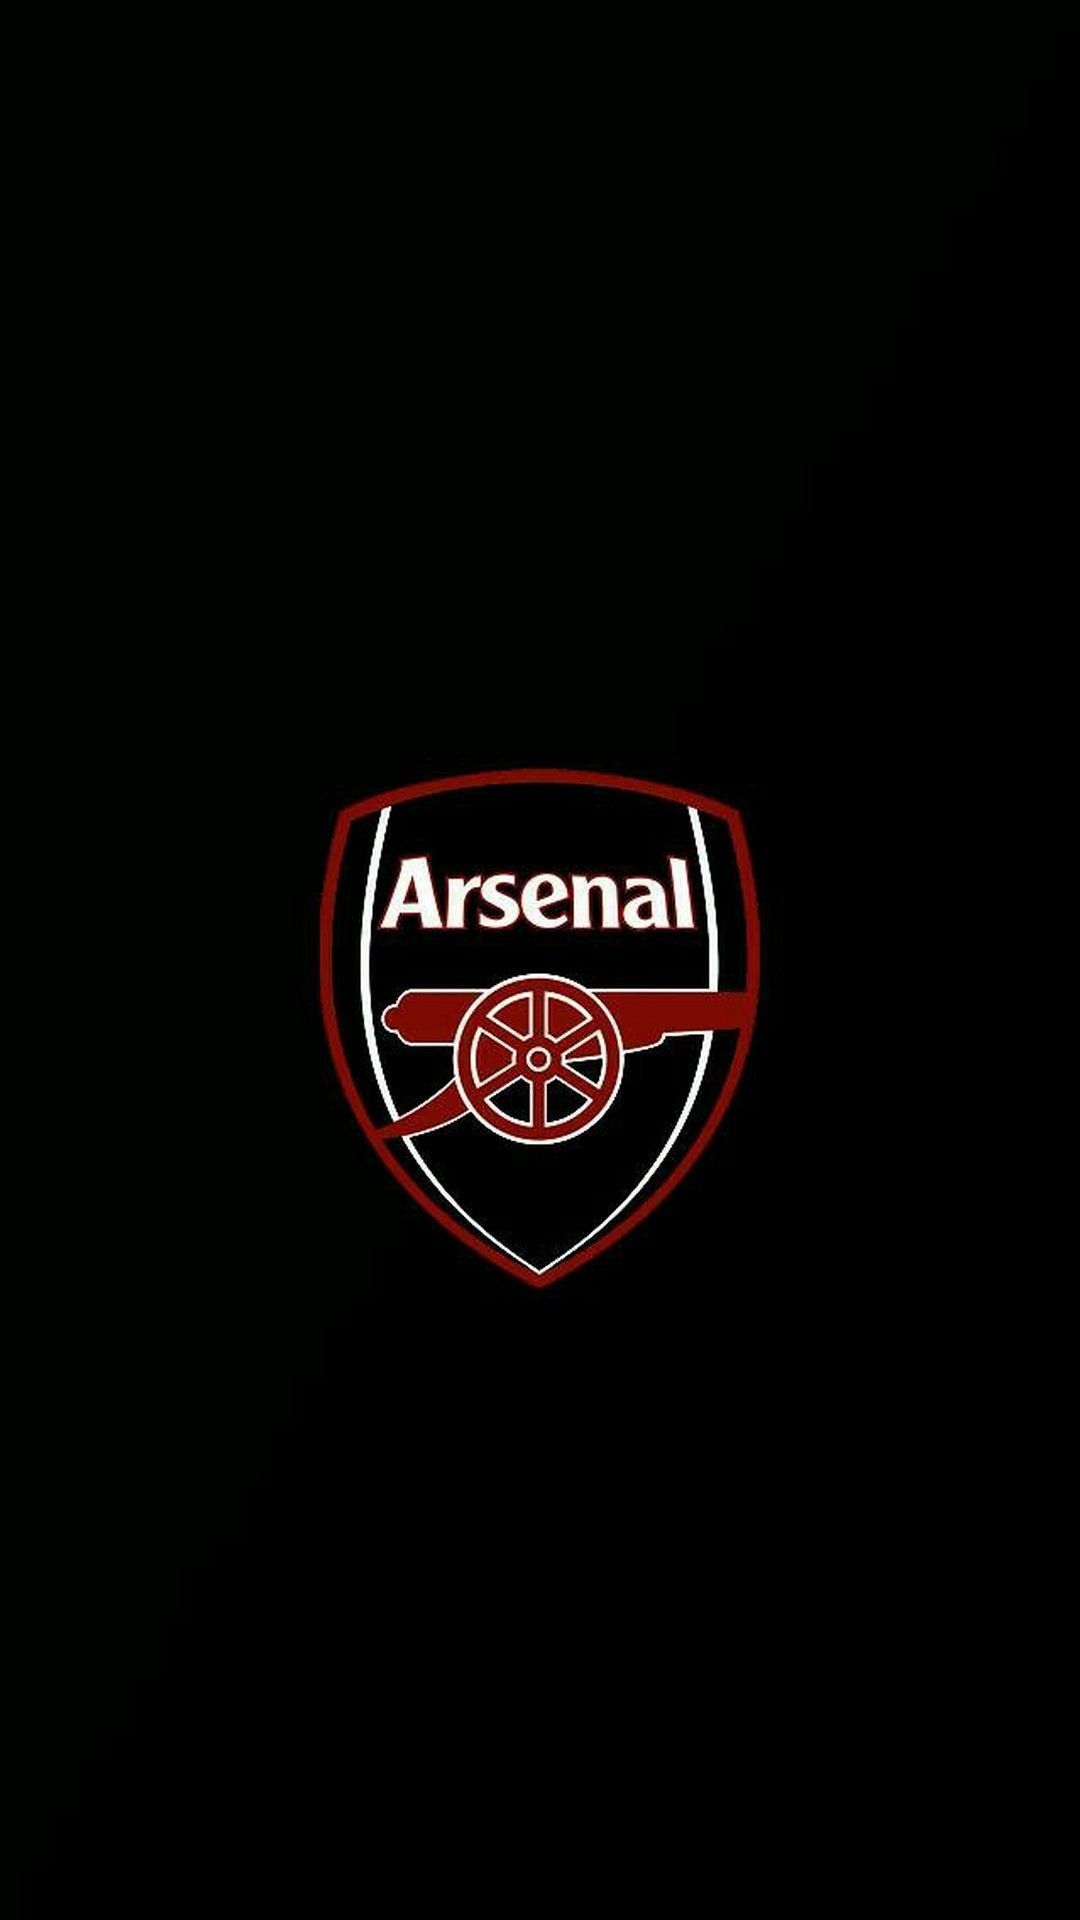 Arsenal Fc Logo Wallpapers 4k Hd Arsenal Fc Logo Backgrounds On Wallpaperbat